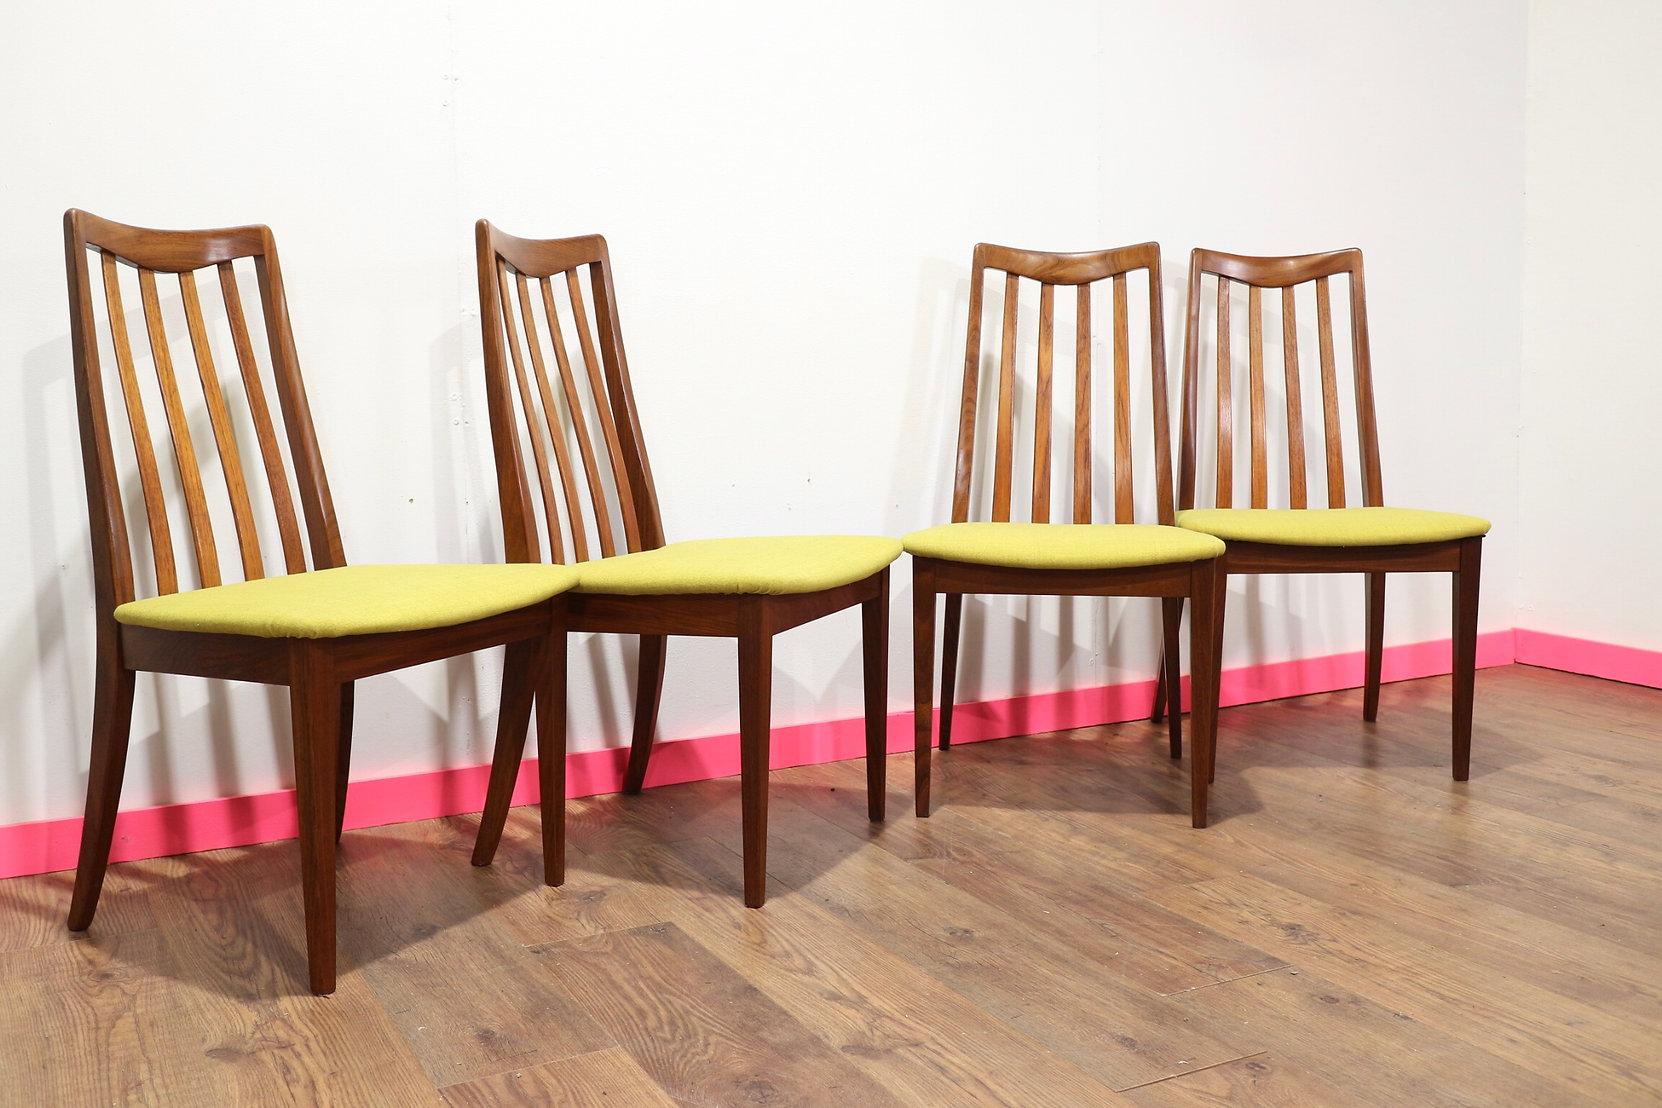 20th Century Mid Century Modern Vintage Teak Dining Chairs x by G Plan Brasilia Range